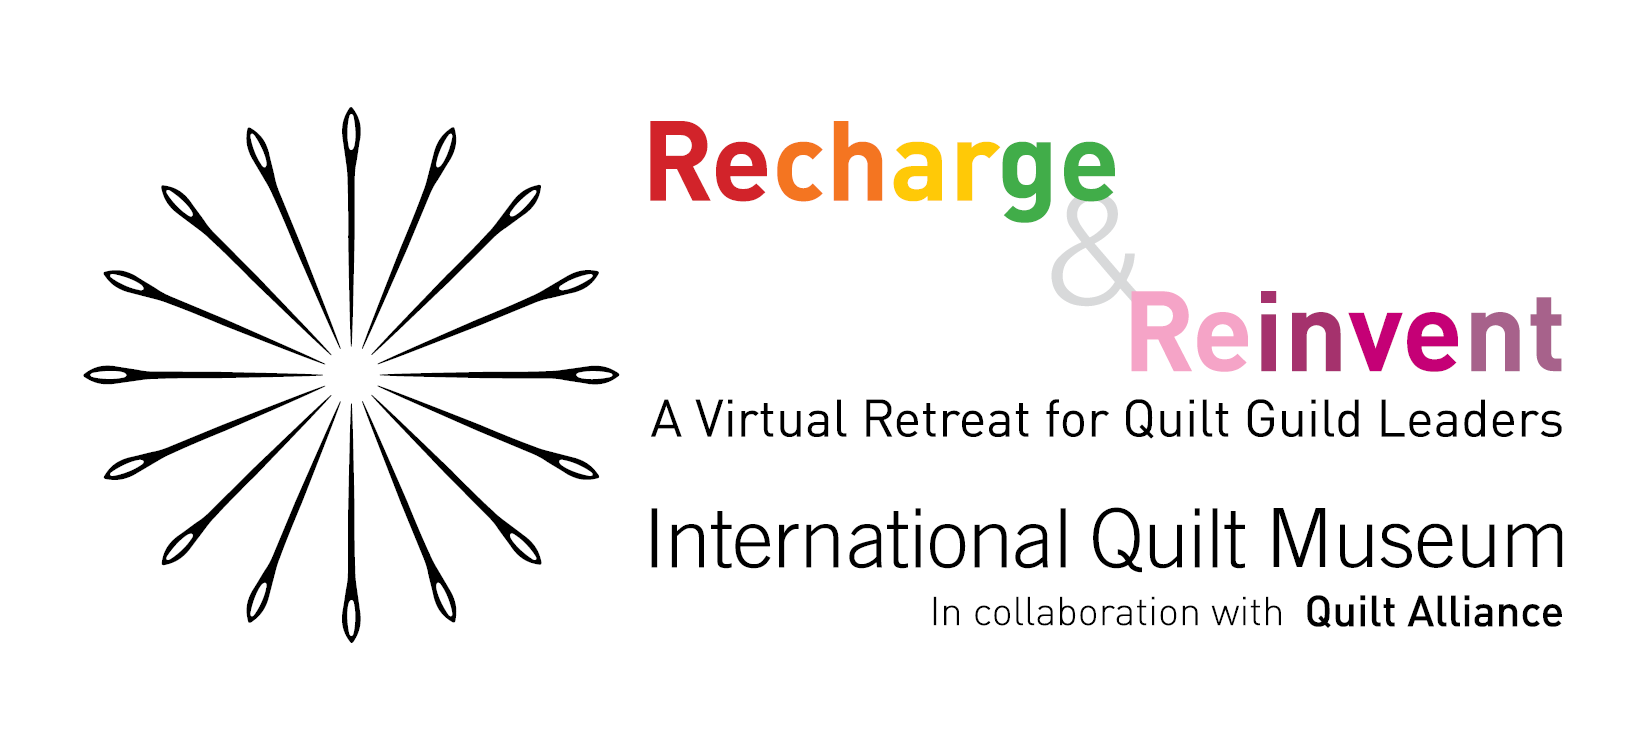 Recharge & Reinvent guild retreat logo